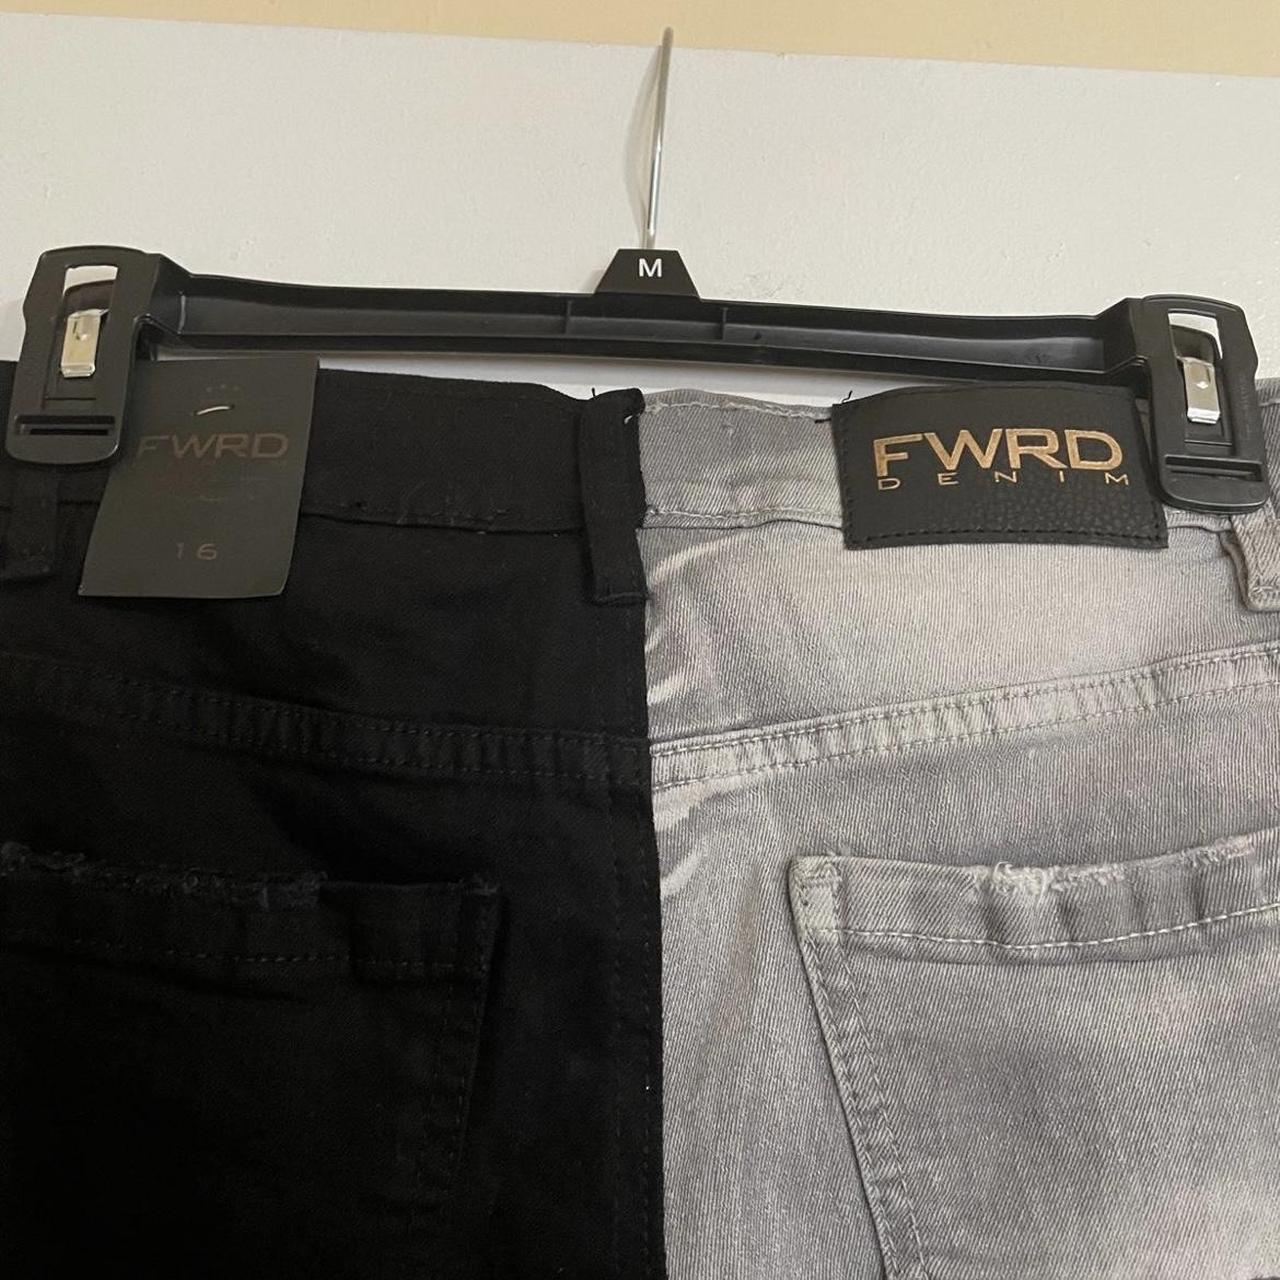 FWRD DENIM Boys Jeans, - Brand new , - Tags intact, 